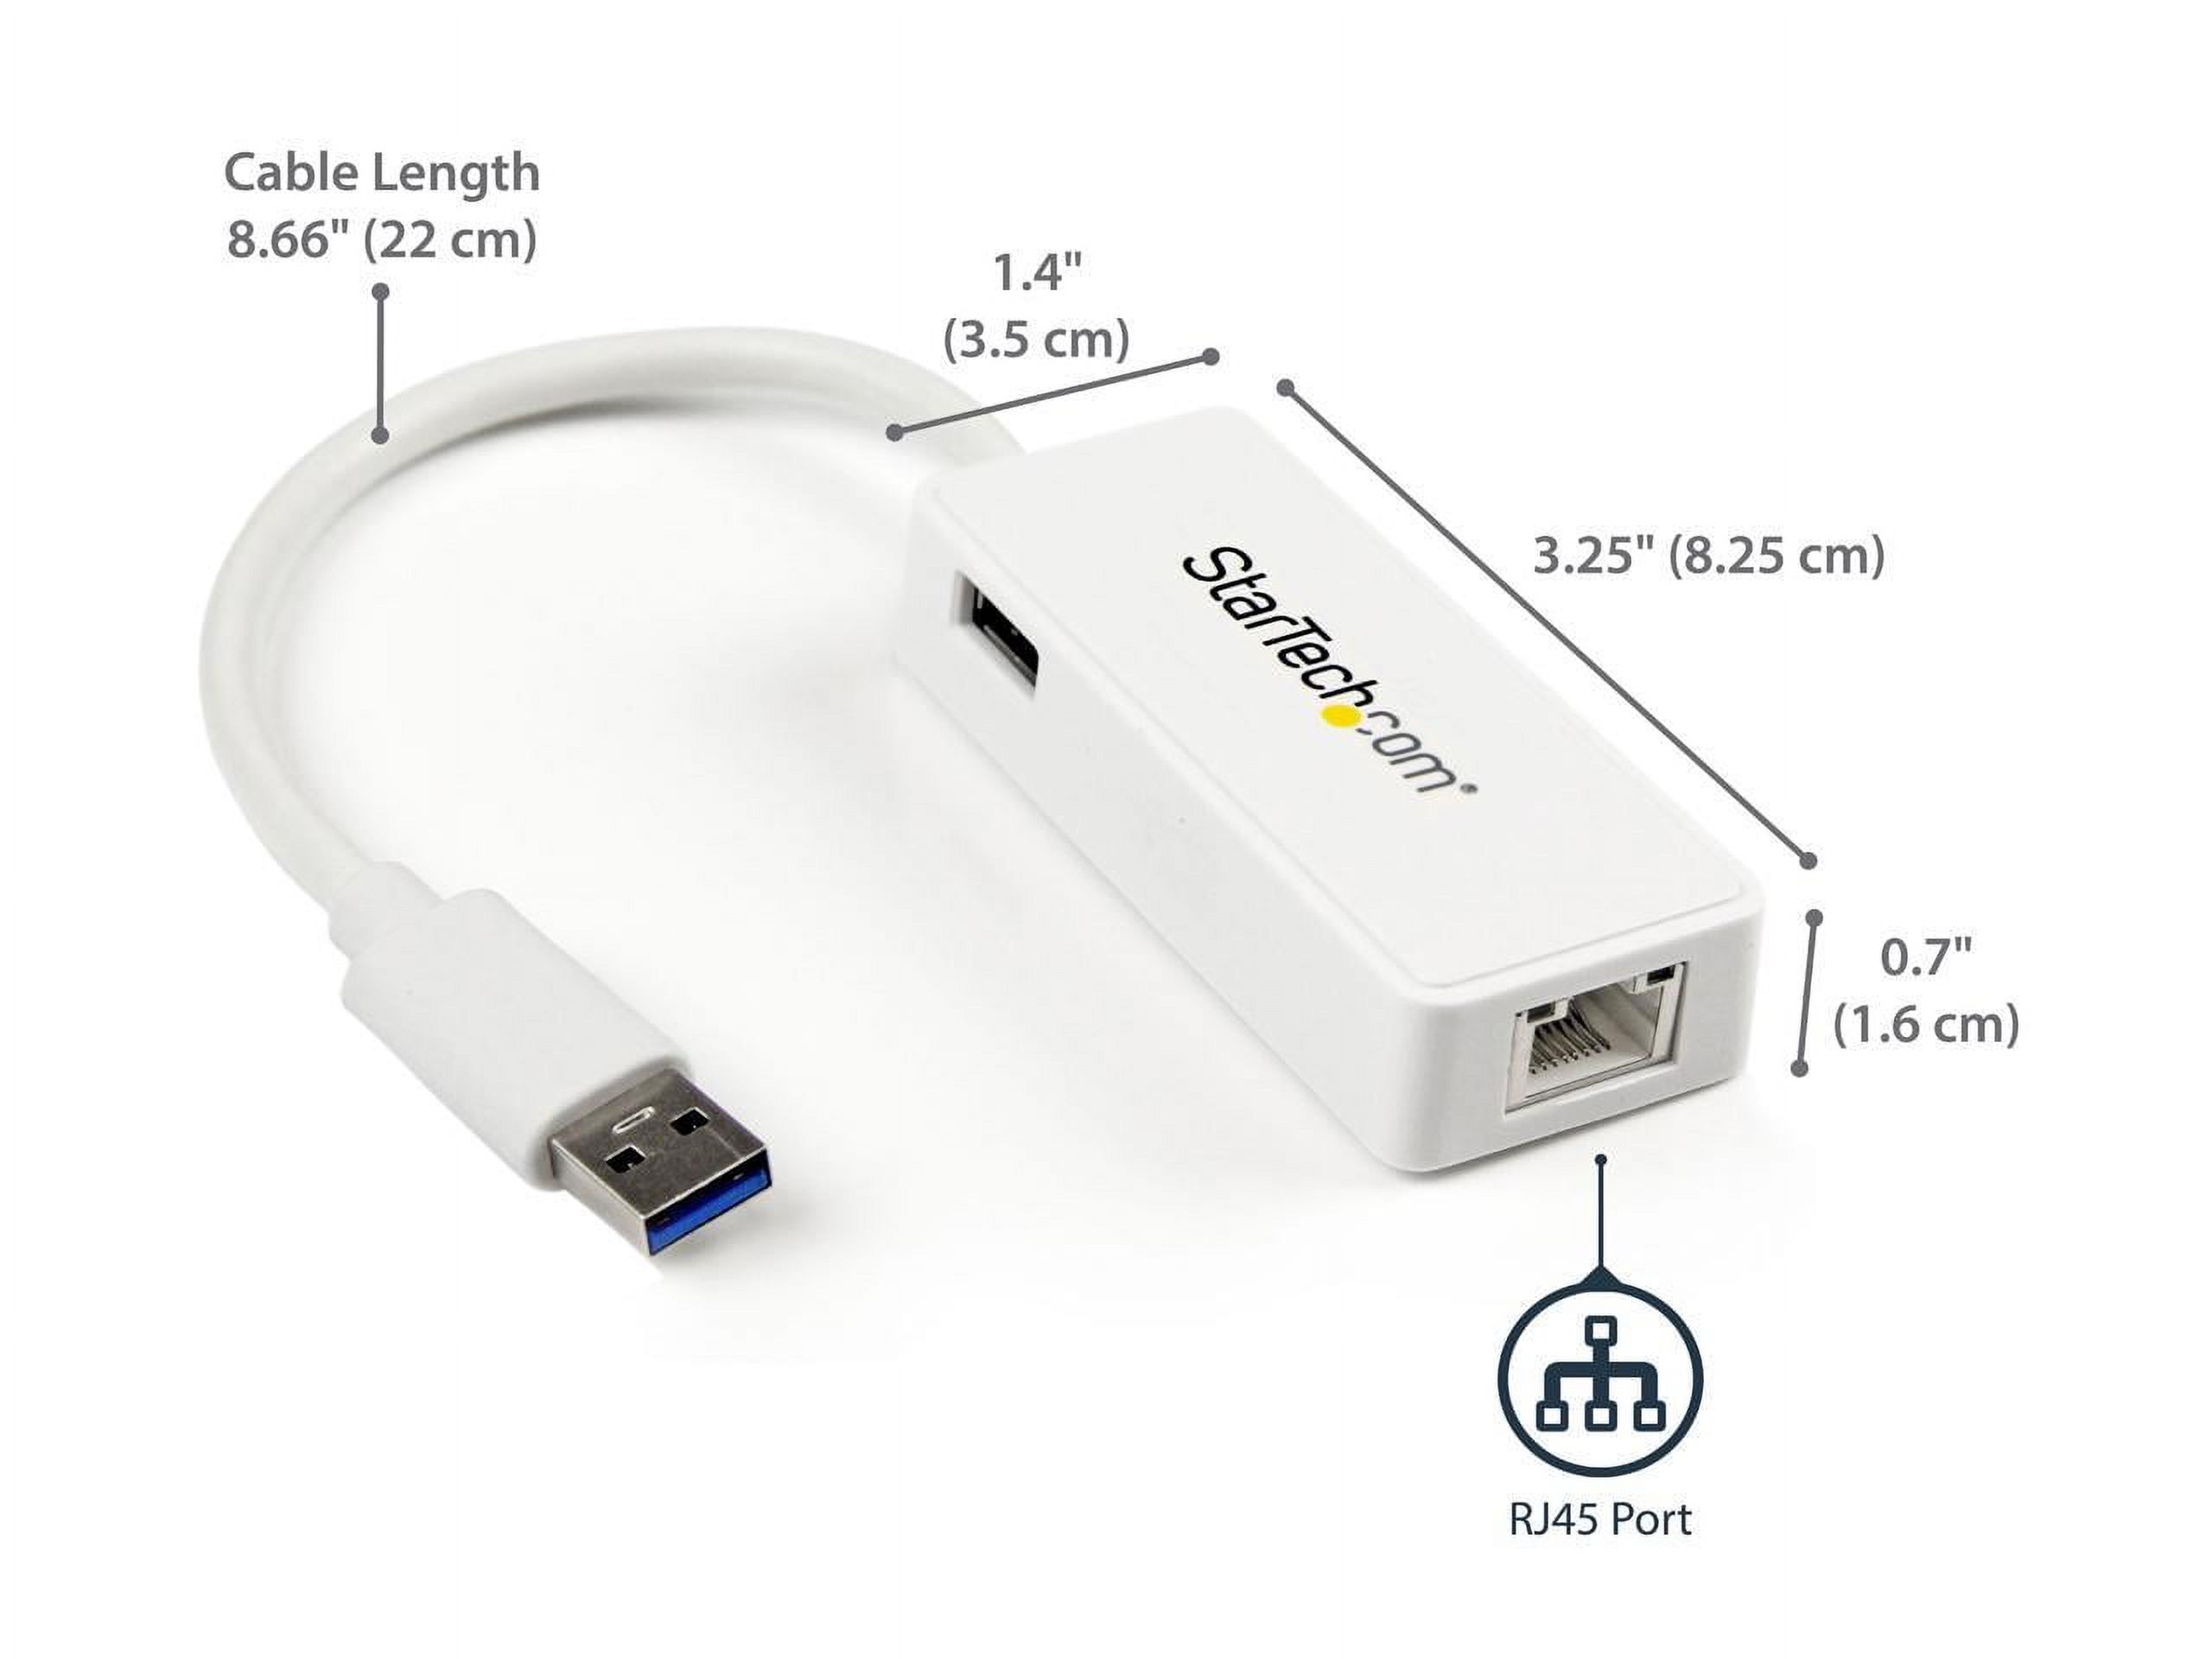 StarTech USB31000SPTW USB 3.0 to Gigabit Ethernet Adapter NIC w/ USB Port - White - image 2 of 6